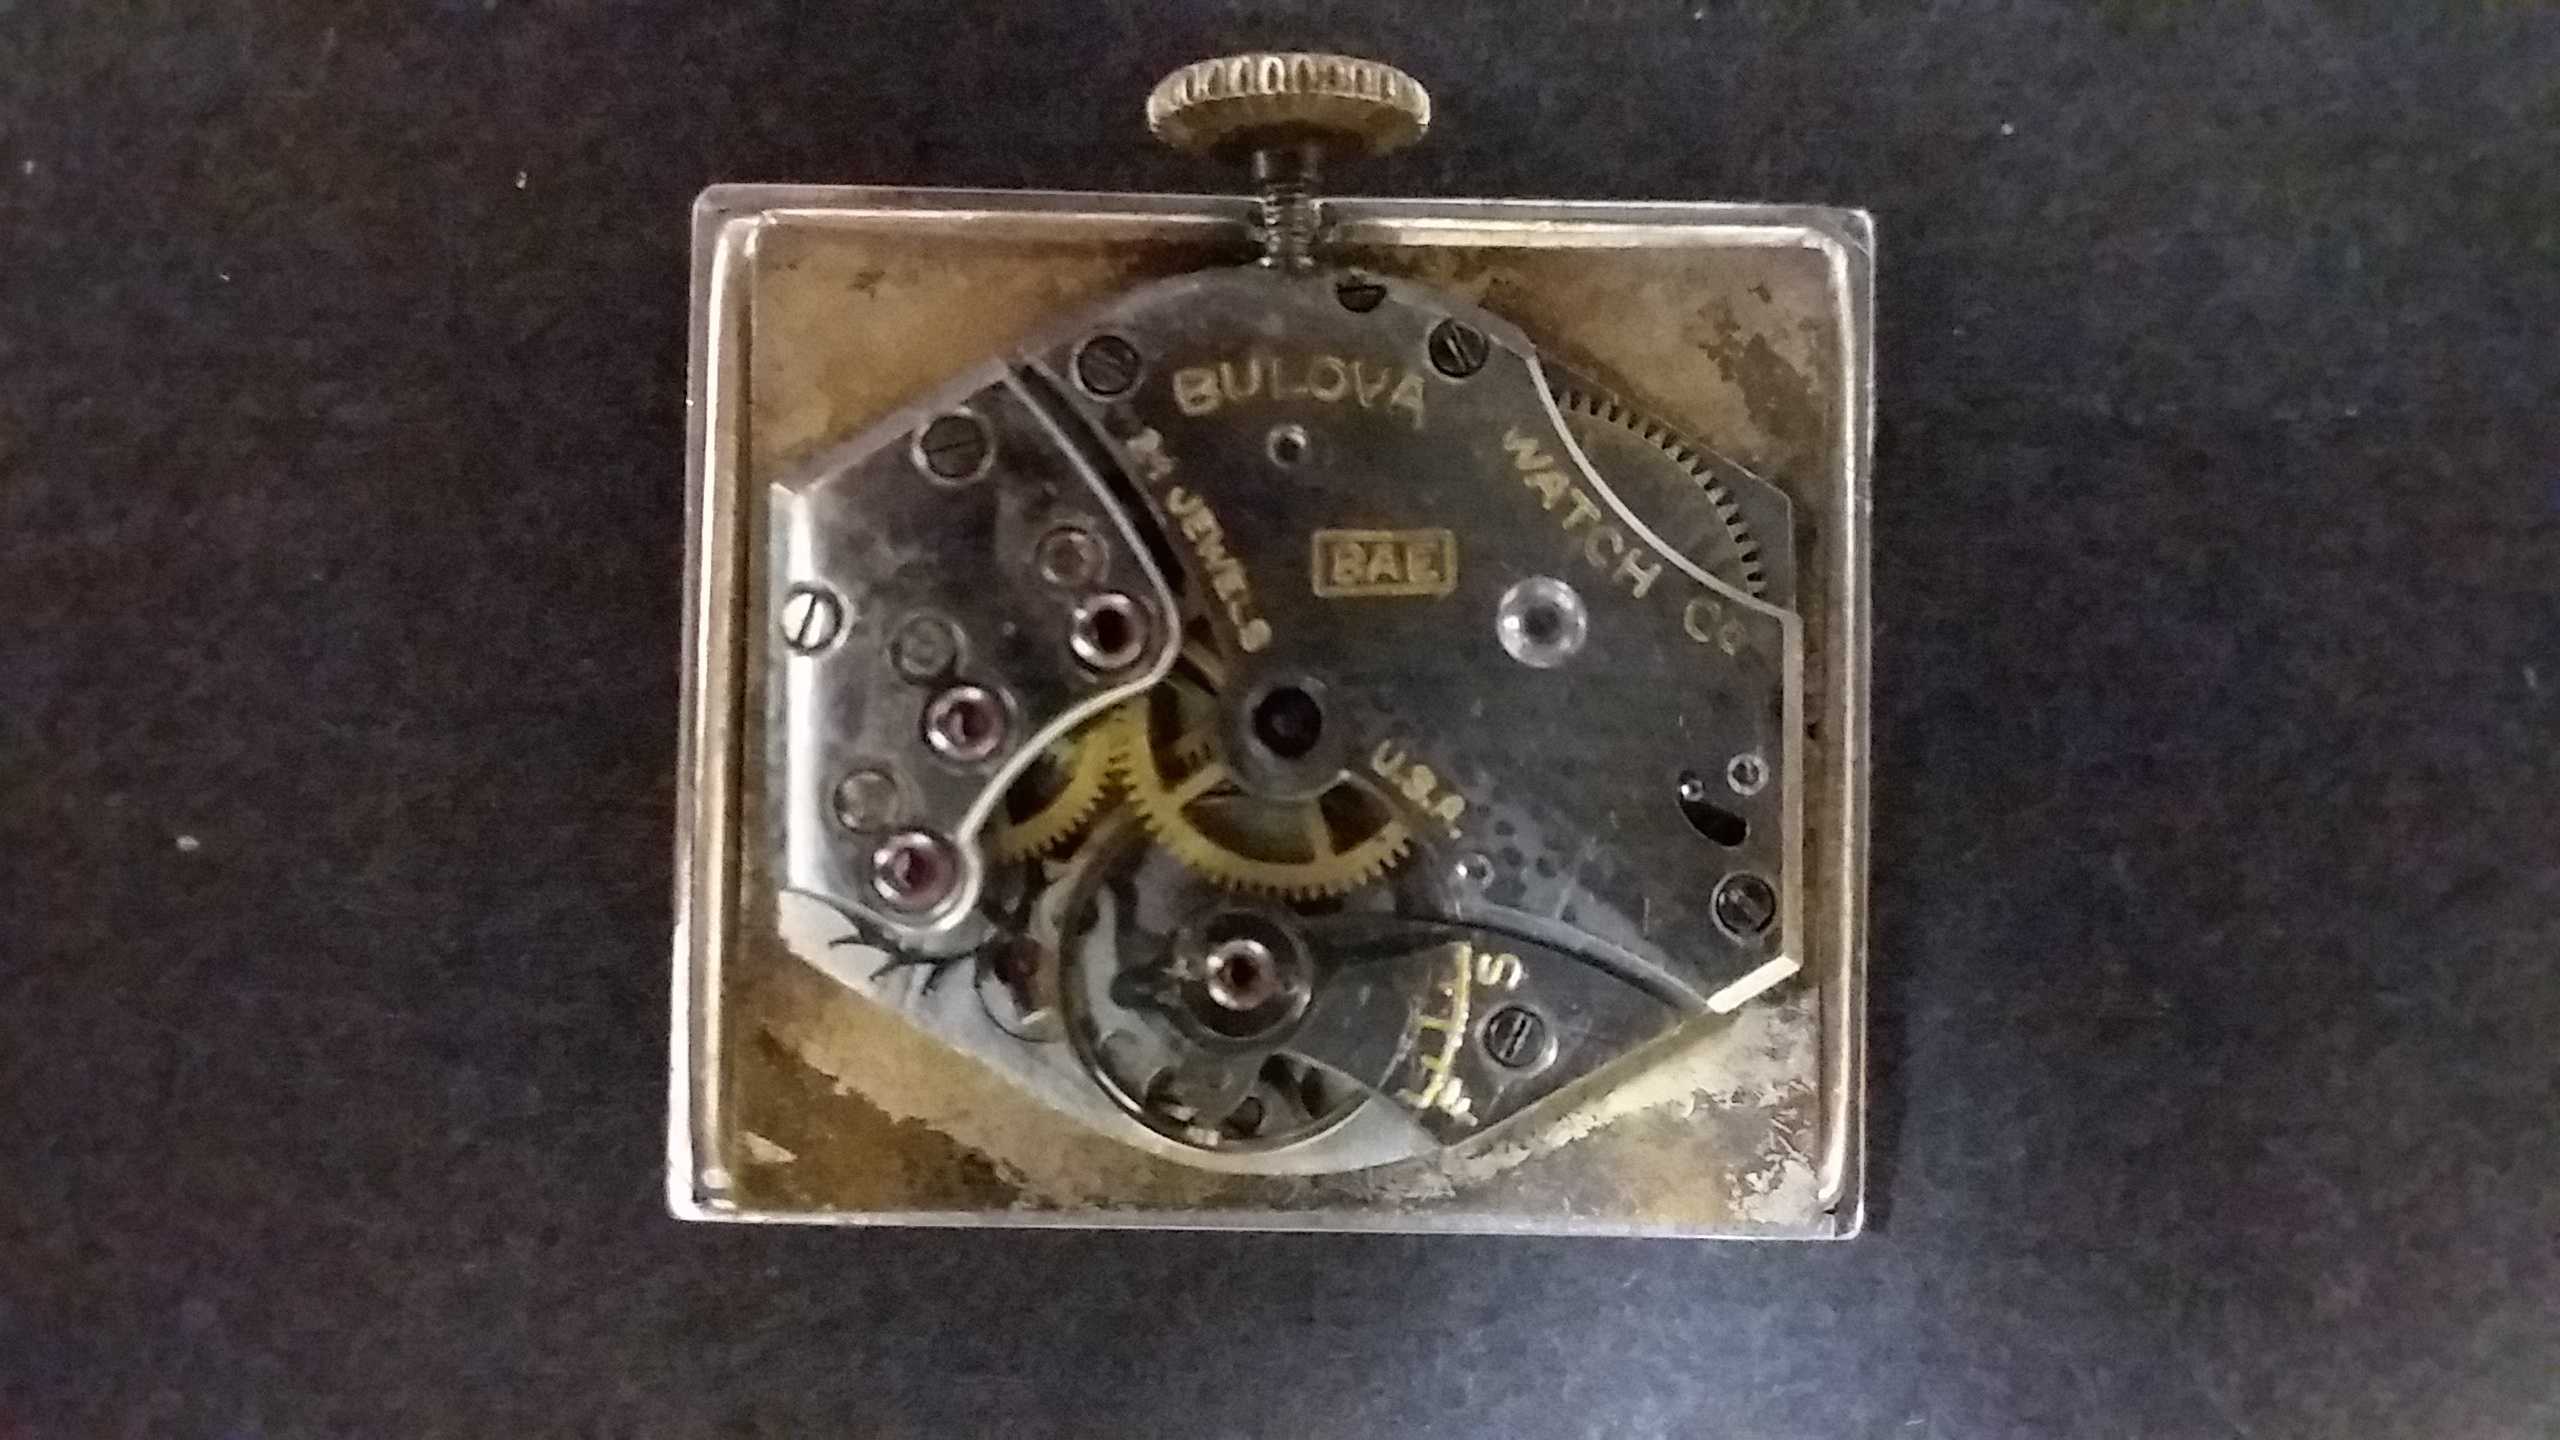 [1945] Bulova watch